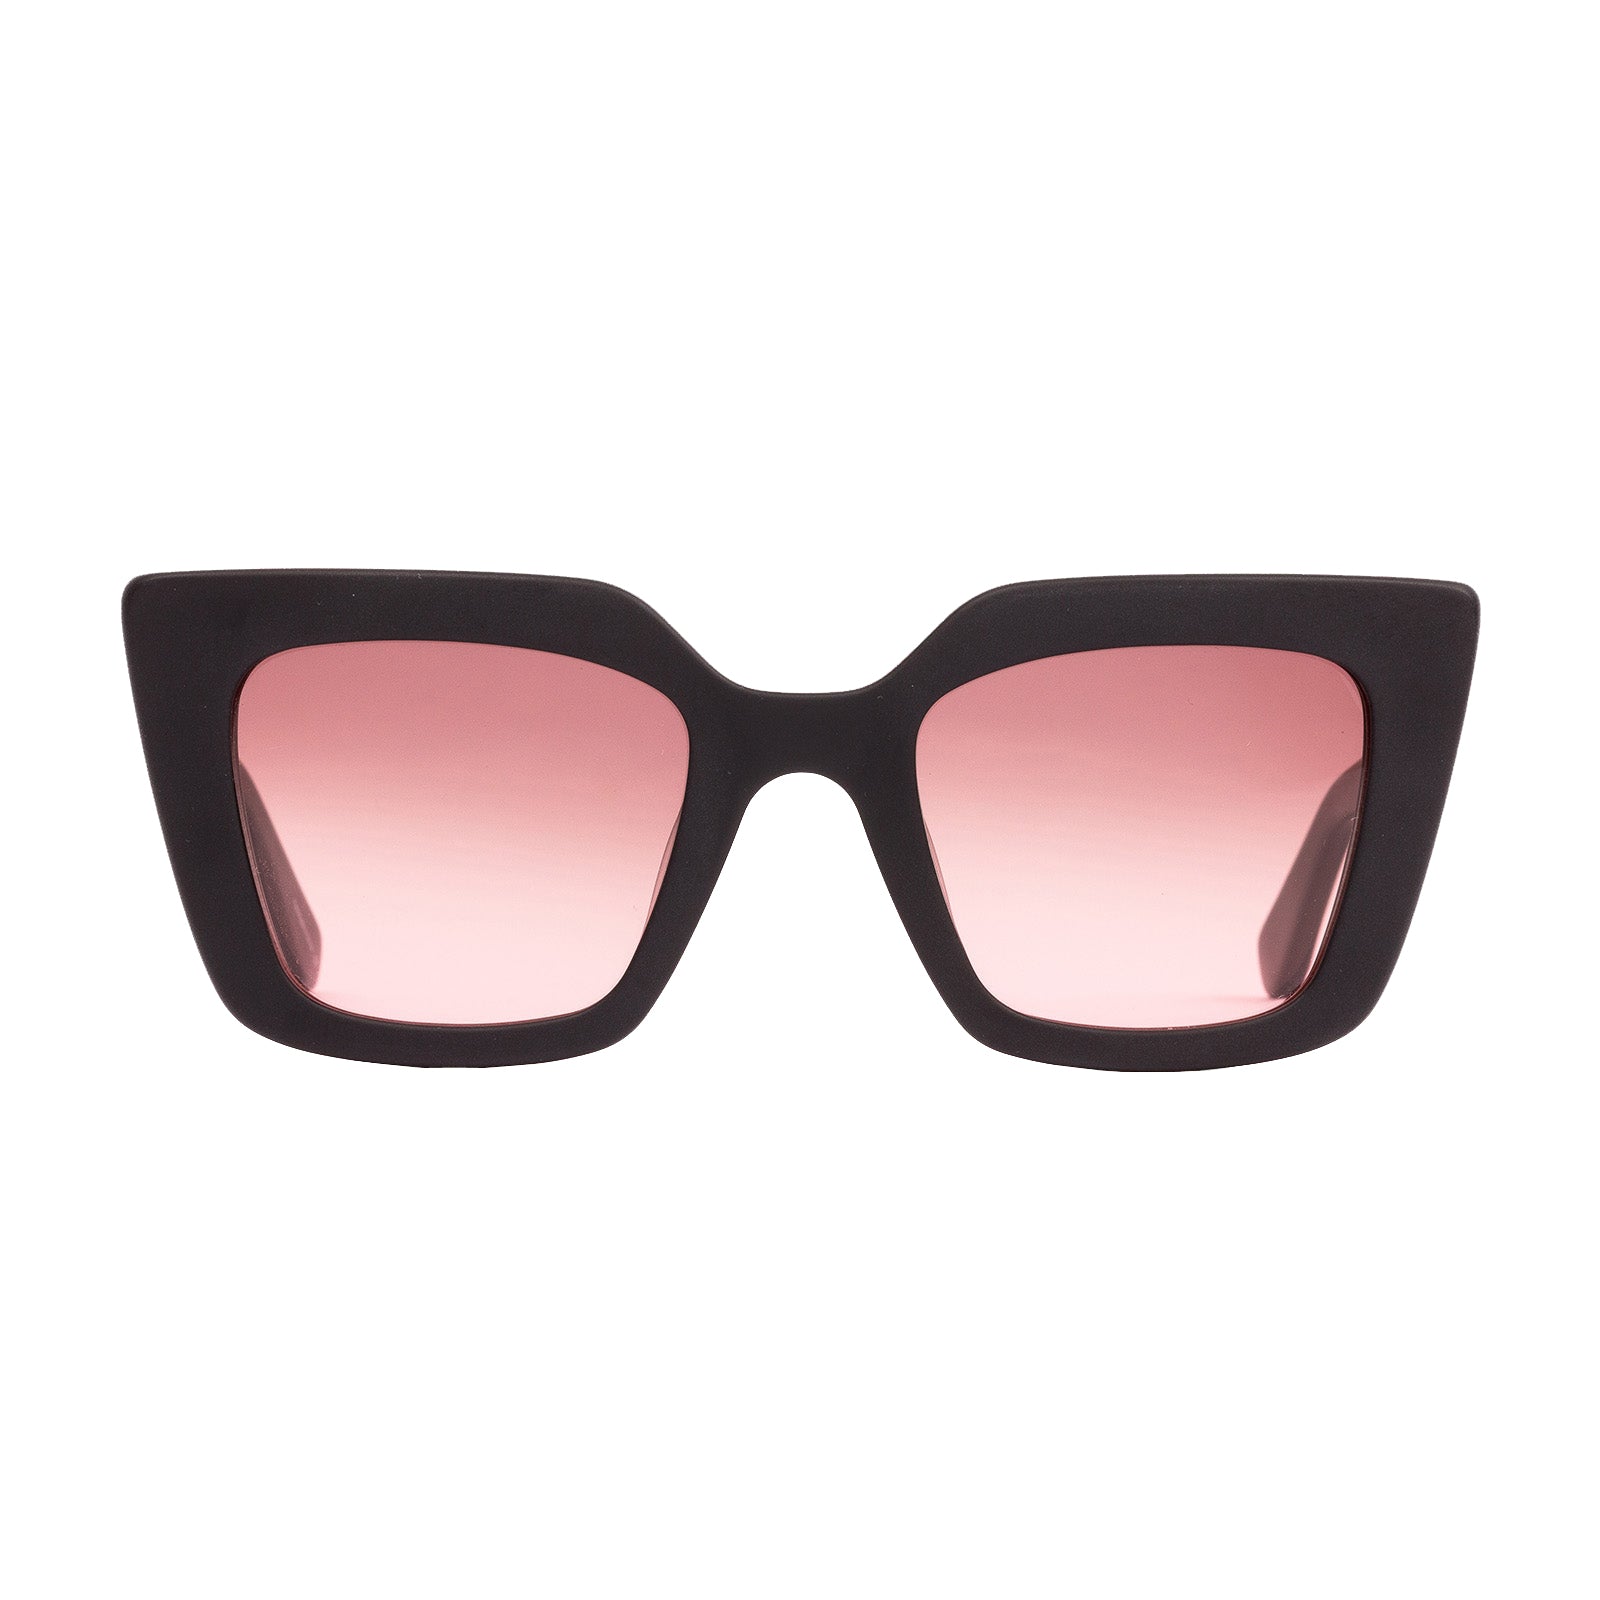 Sito Cult Vision Sunglasses MatteBlack GreyRoseGradient